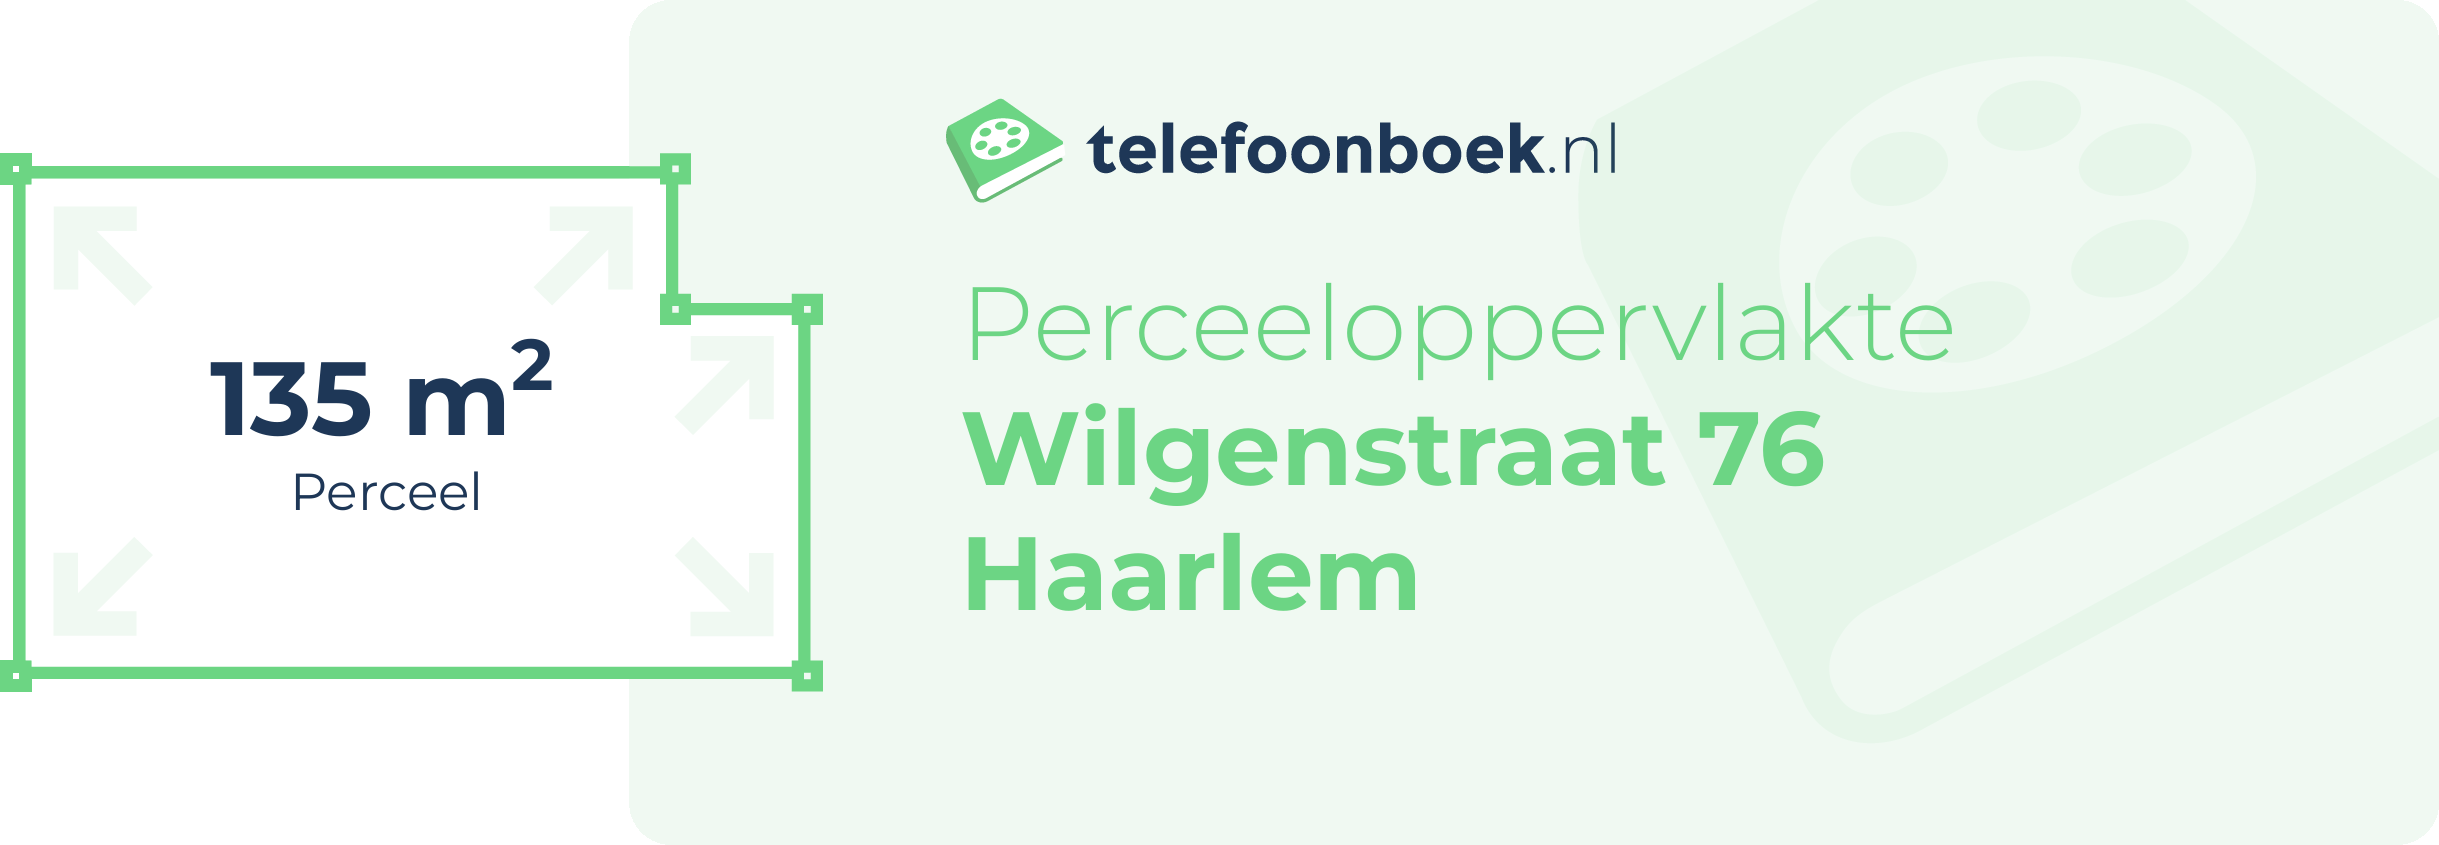 Perceeloppervlakte Wilgenstraat 76 Haarlem